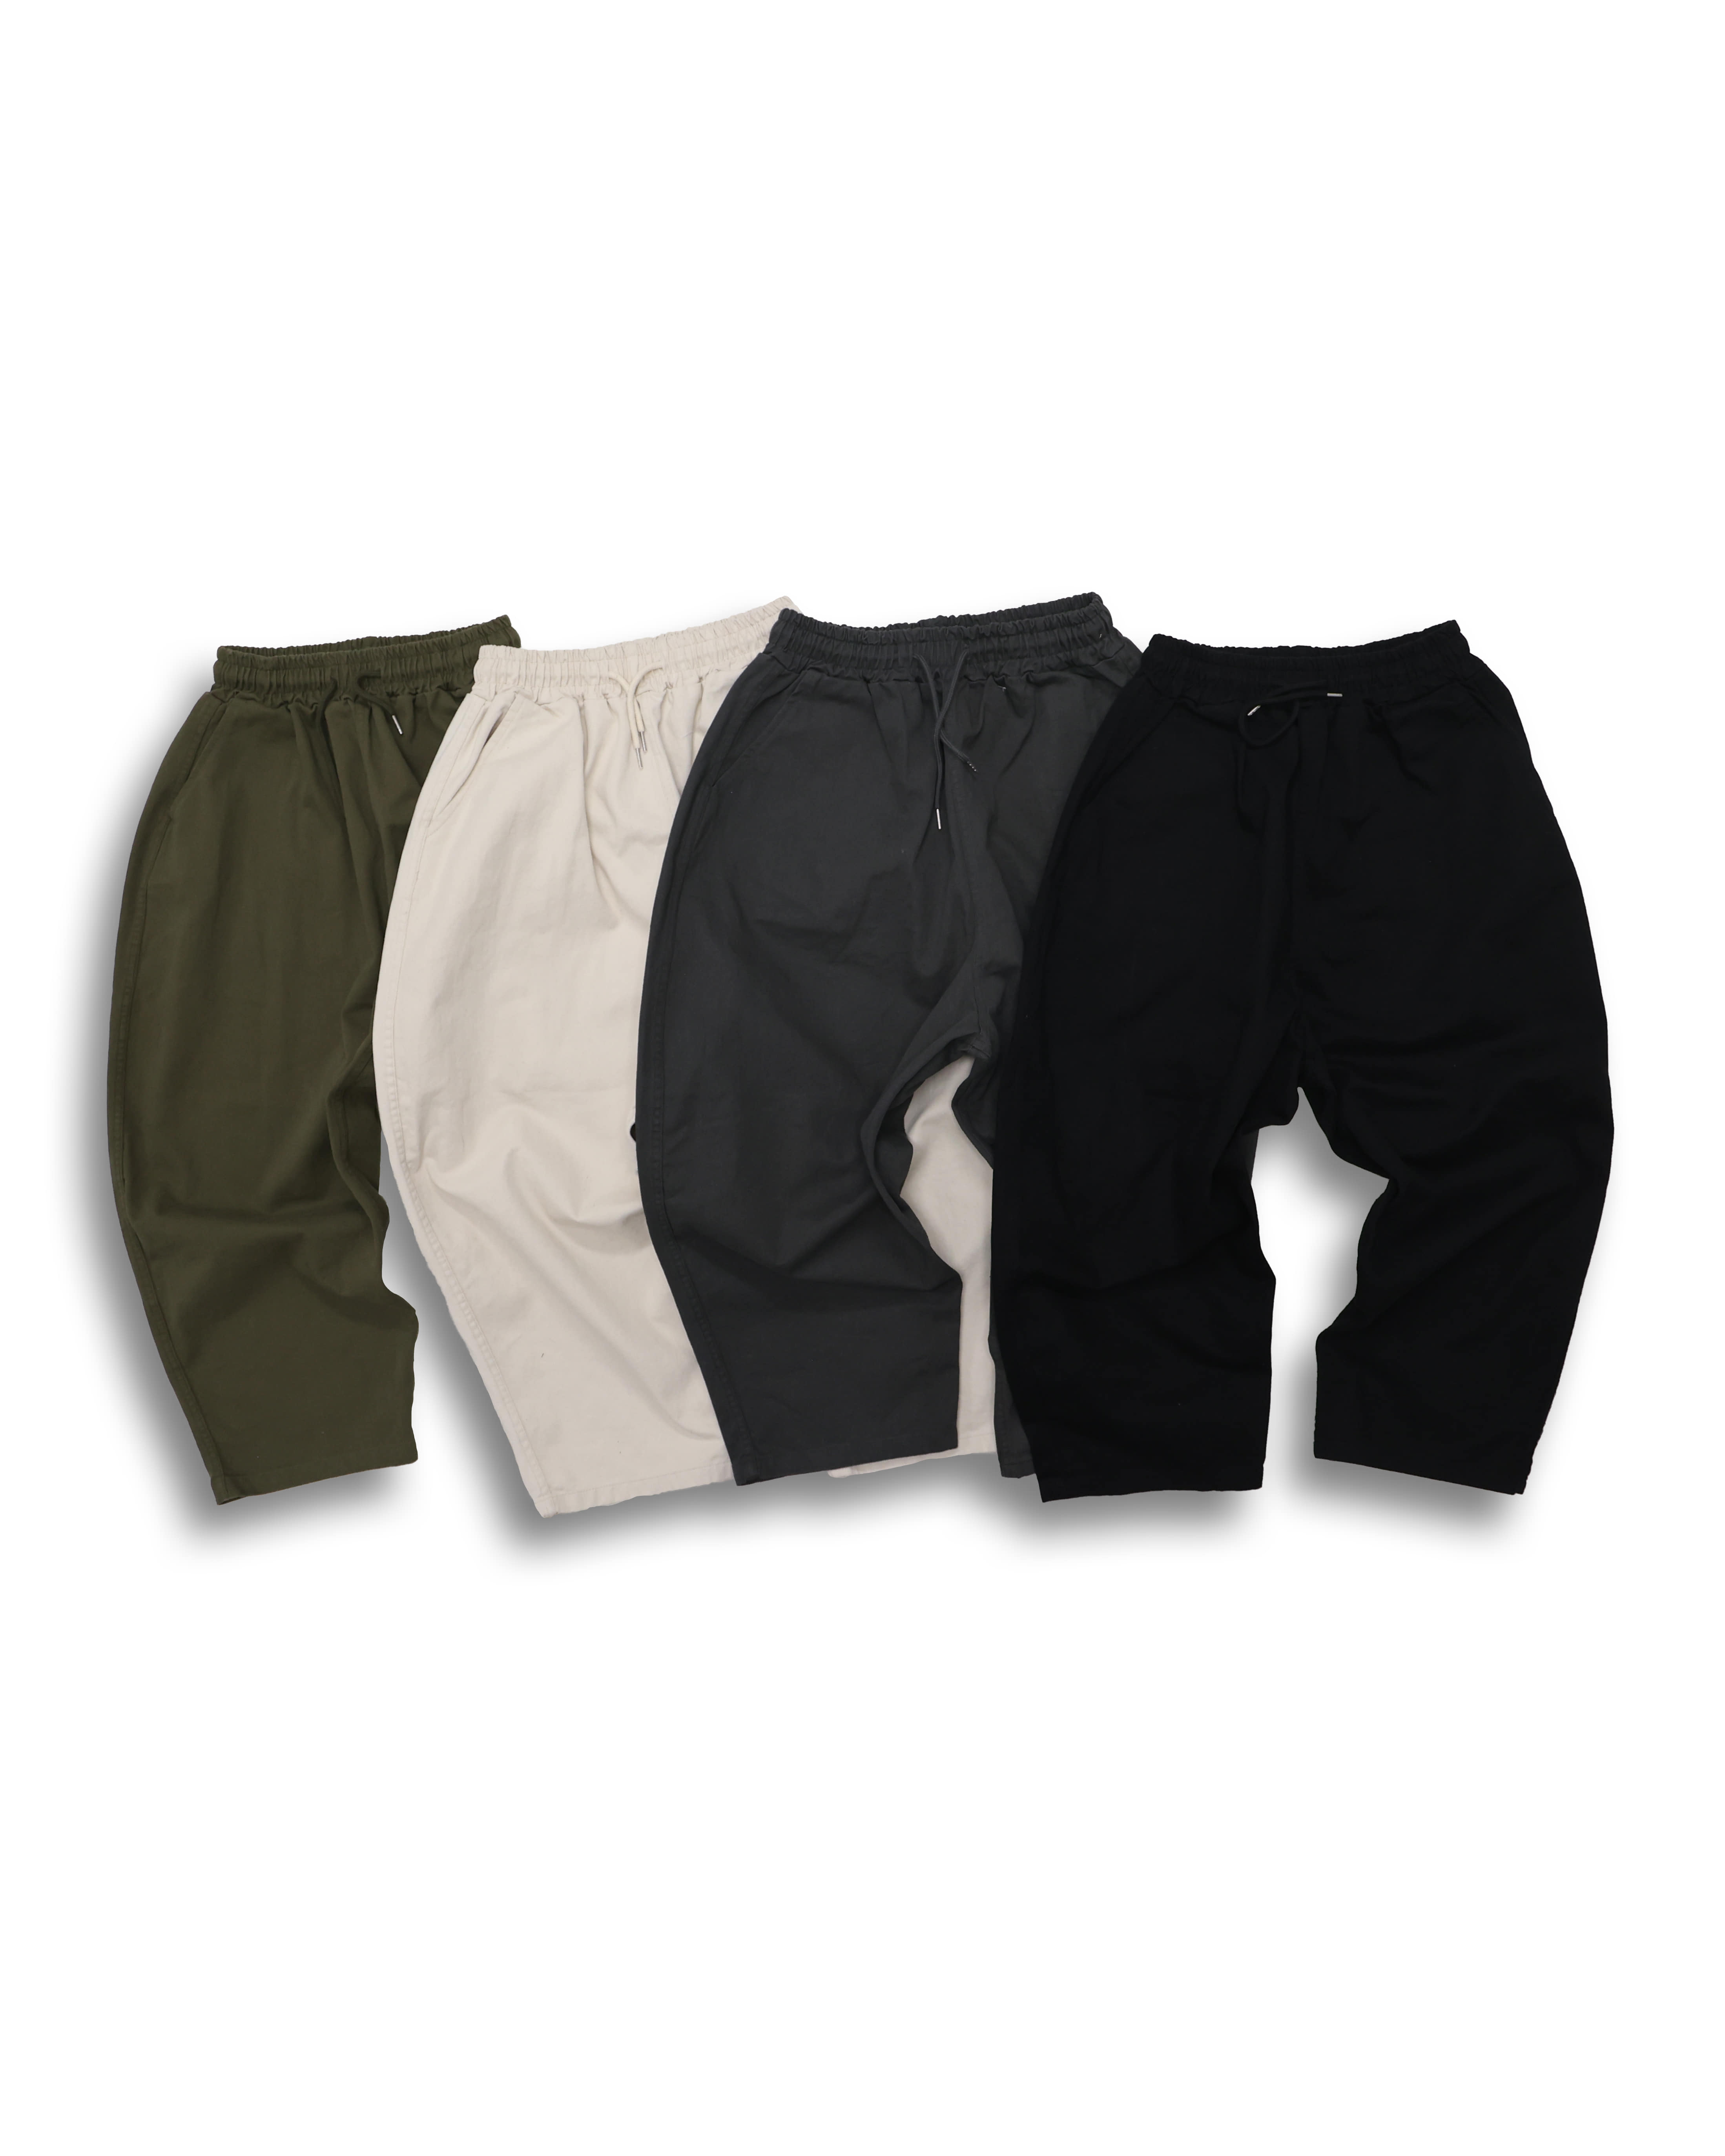 PERCENT Basic Crop Balloon Pants (Black/Charcoal/Khaki/Cream)